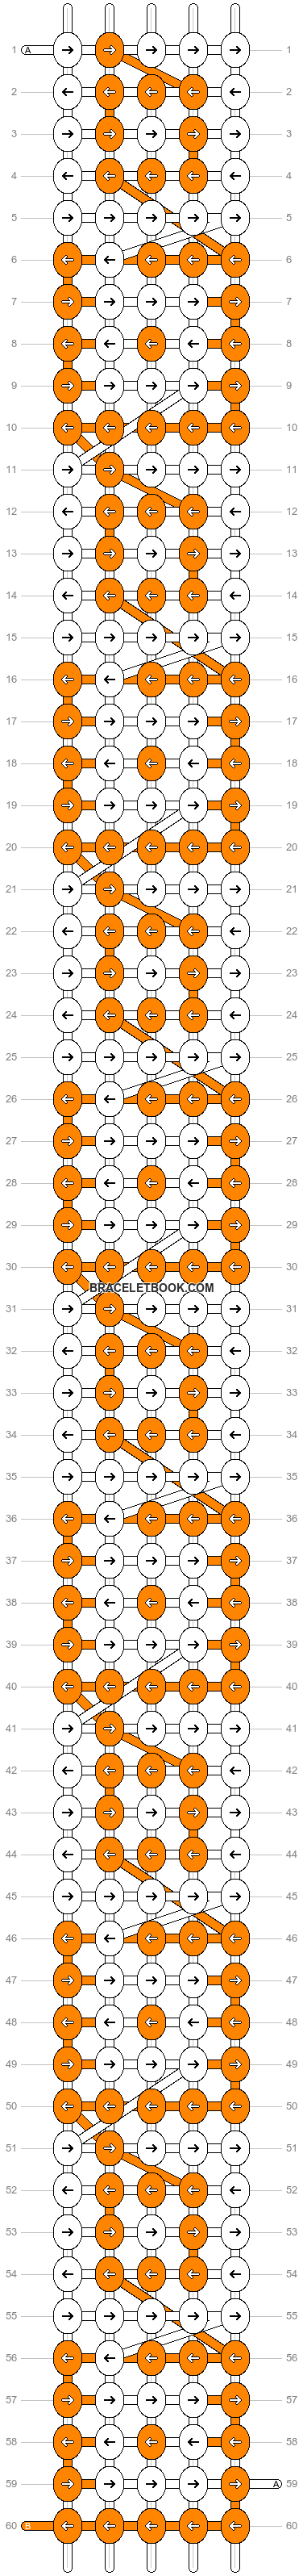 Alpha pattern #44556 pattern